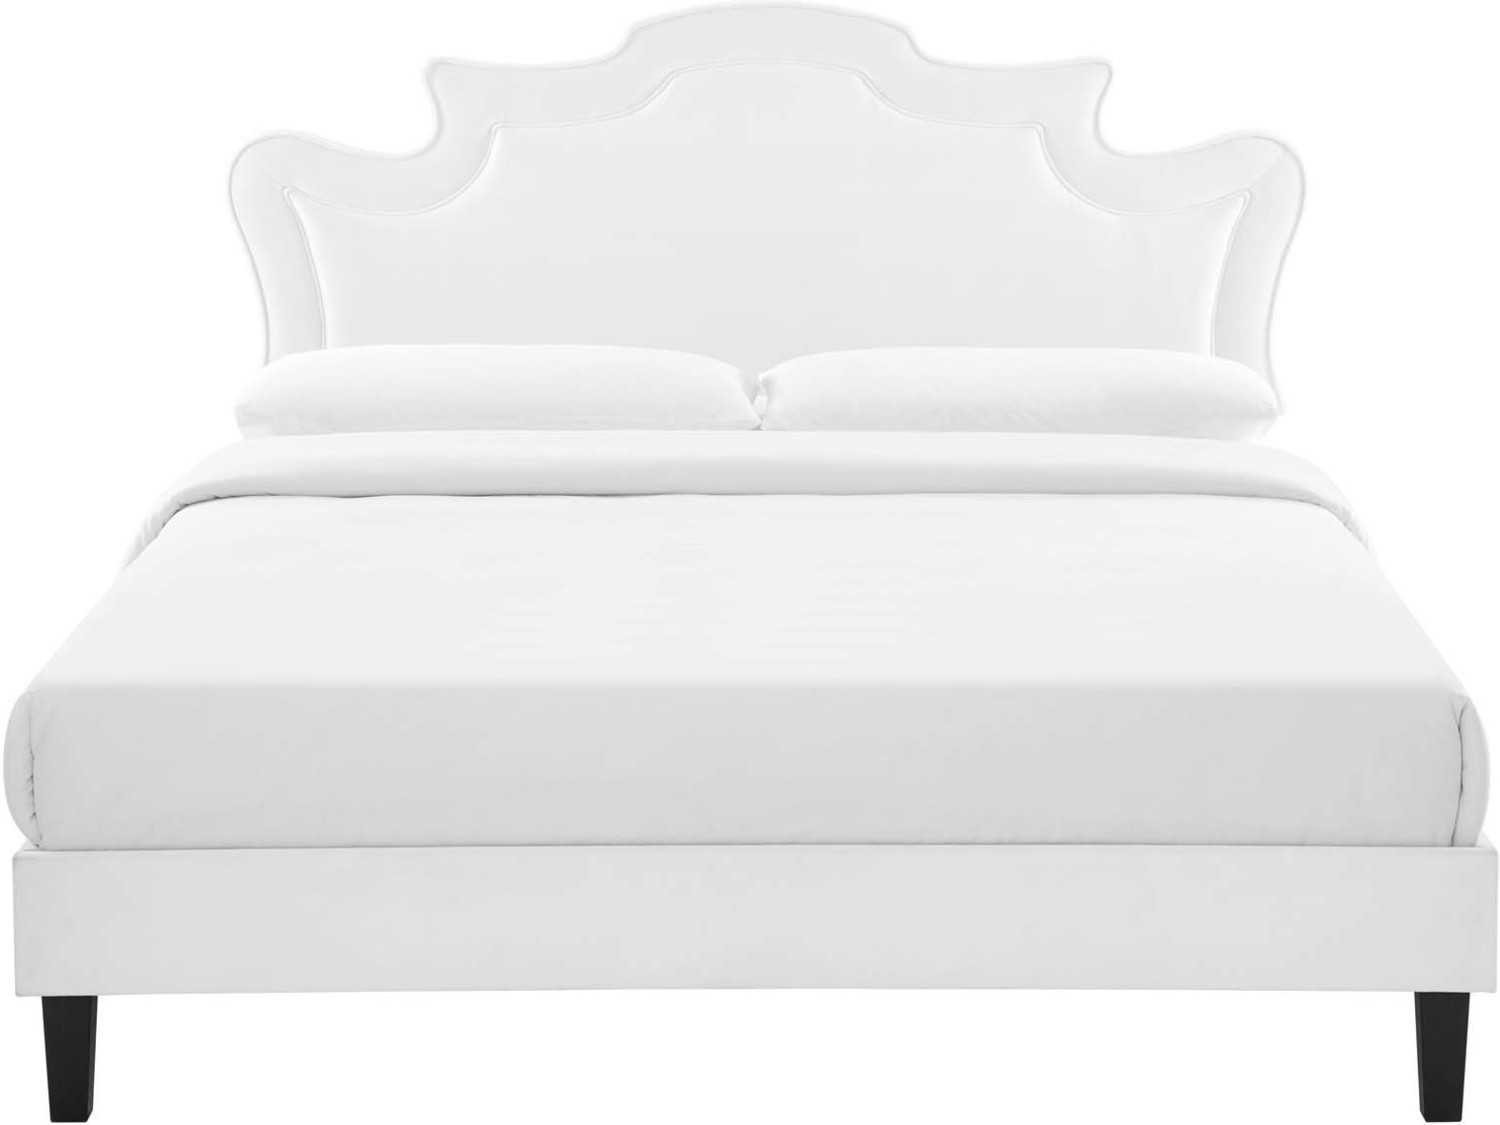 queen size metal platform bed frame Modway Furniture Beds White